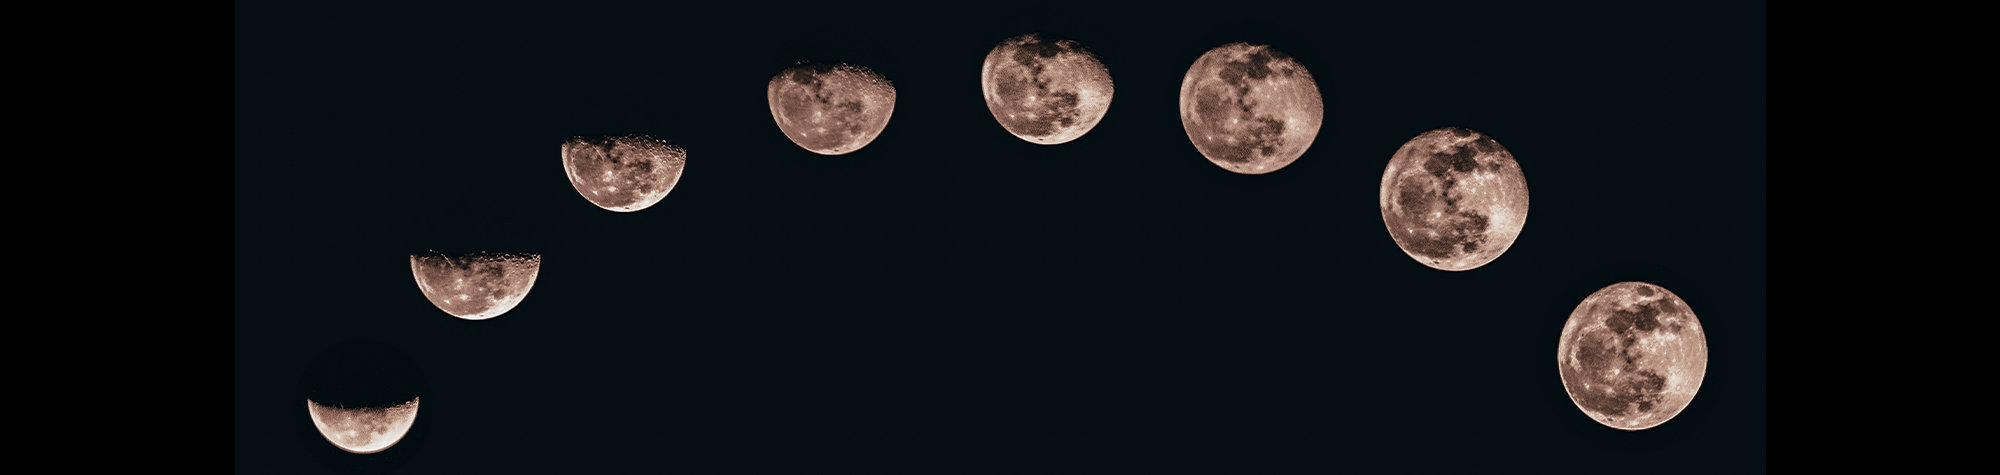 Moon phases across black background